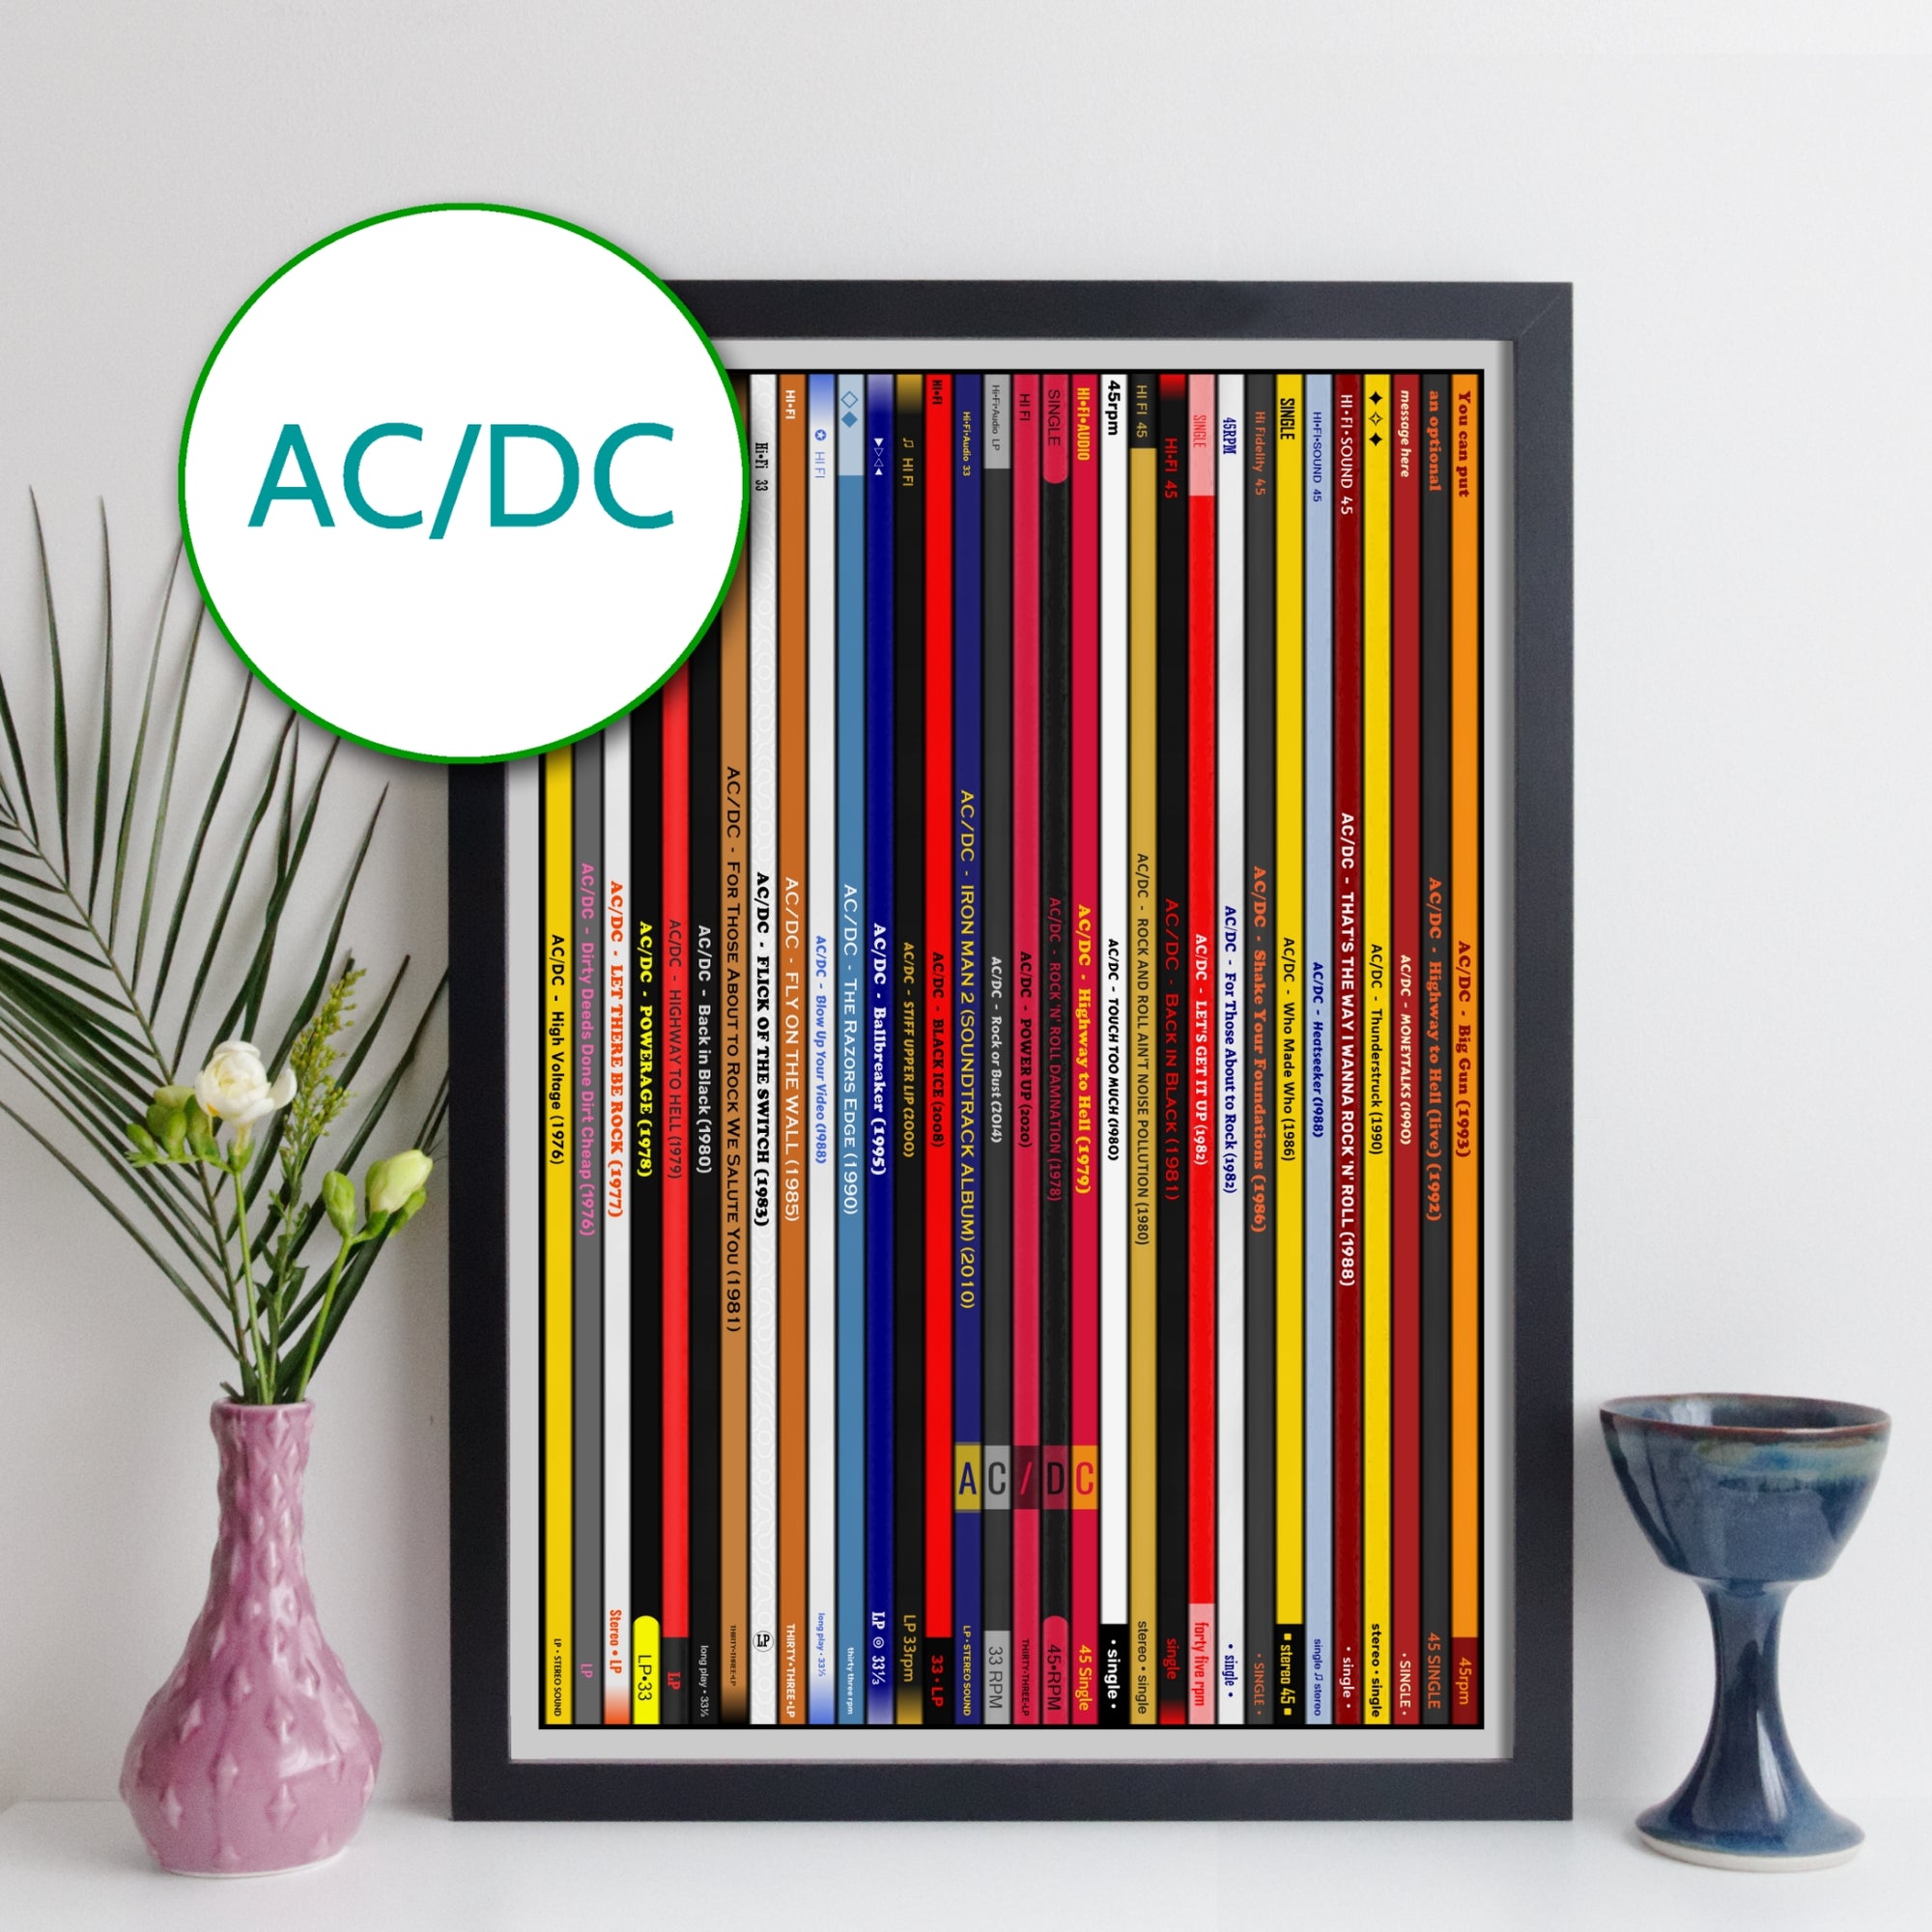 AC/DC Discography Print